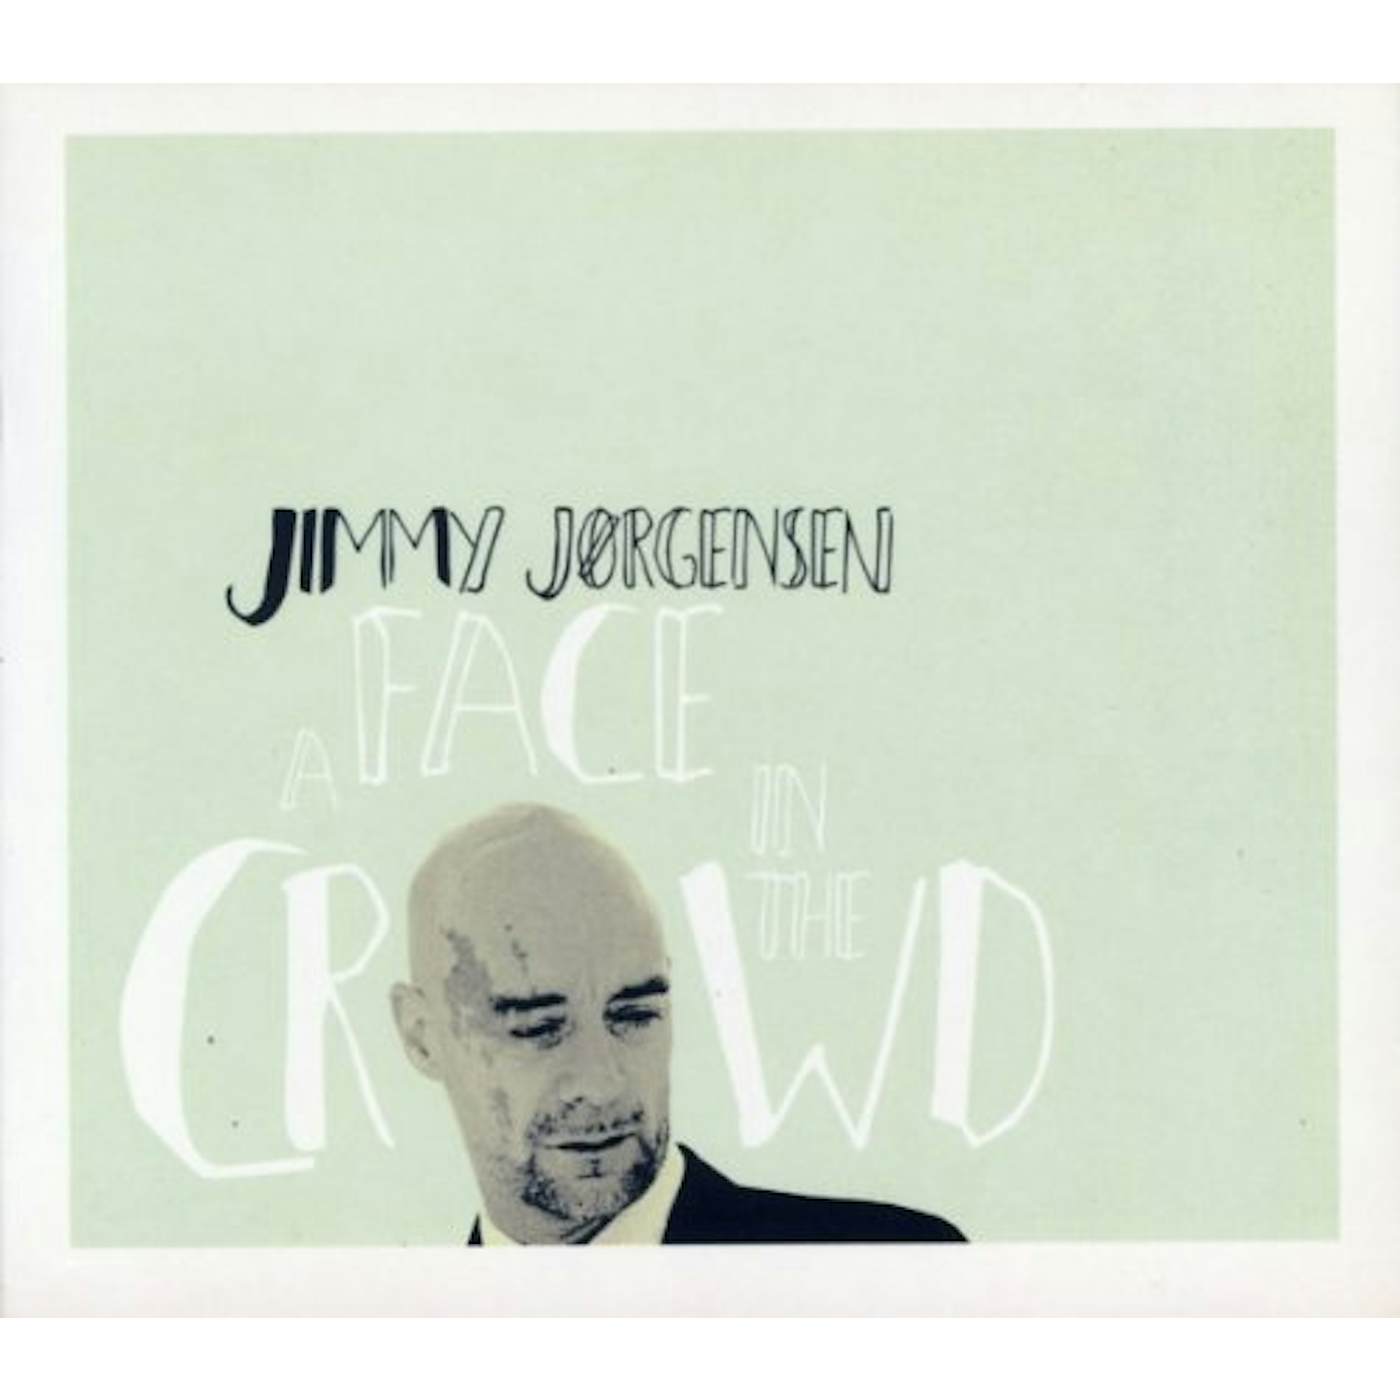 Jimmy Jørgensen FACE IN THE CROWD CD